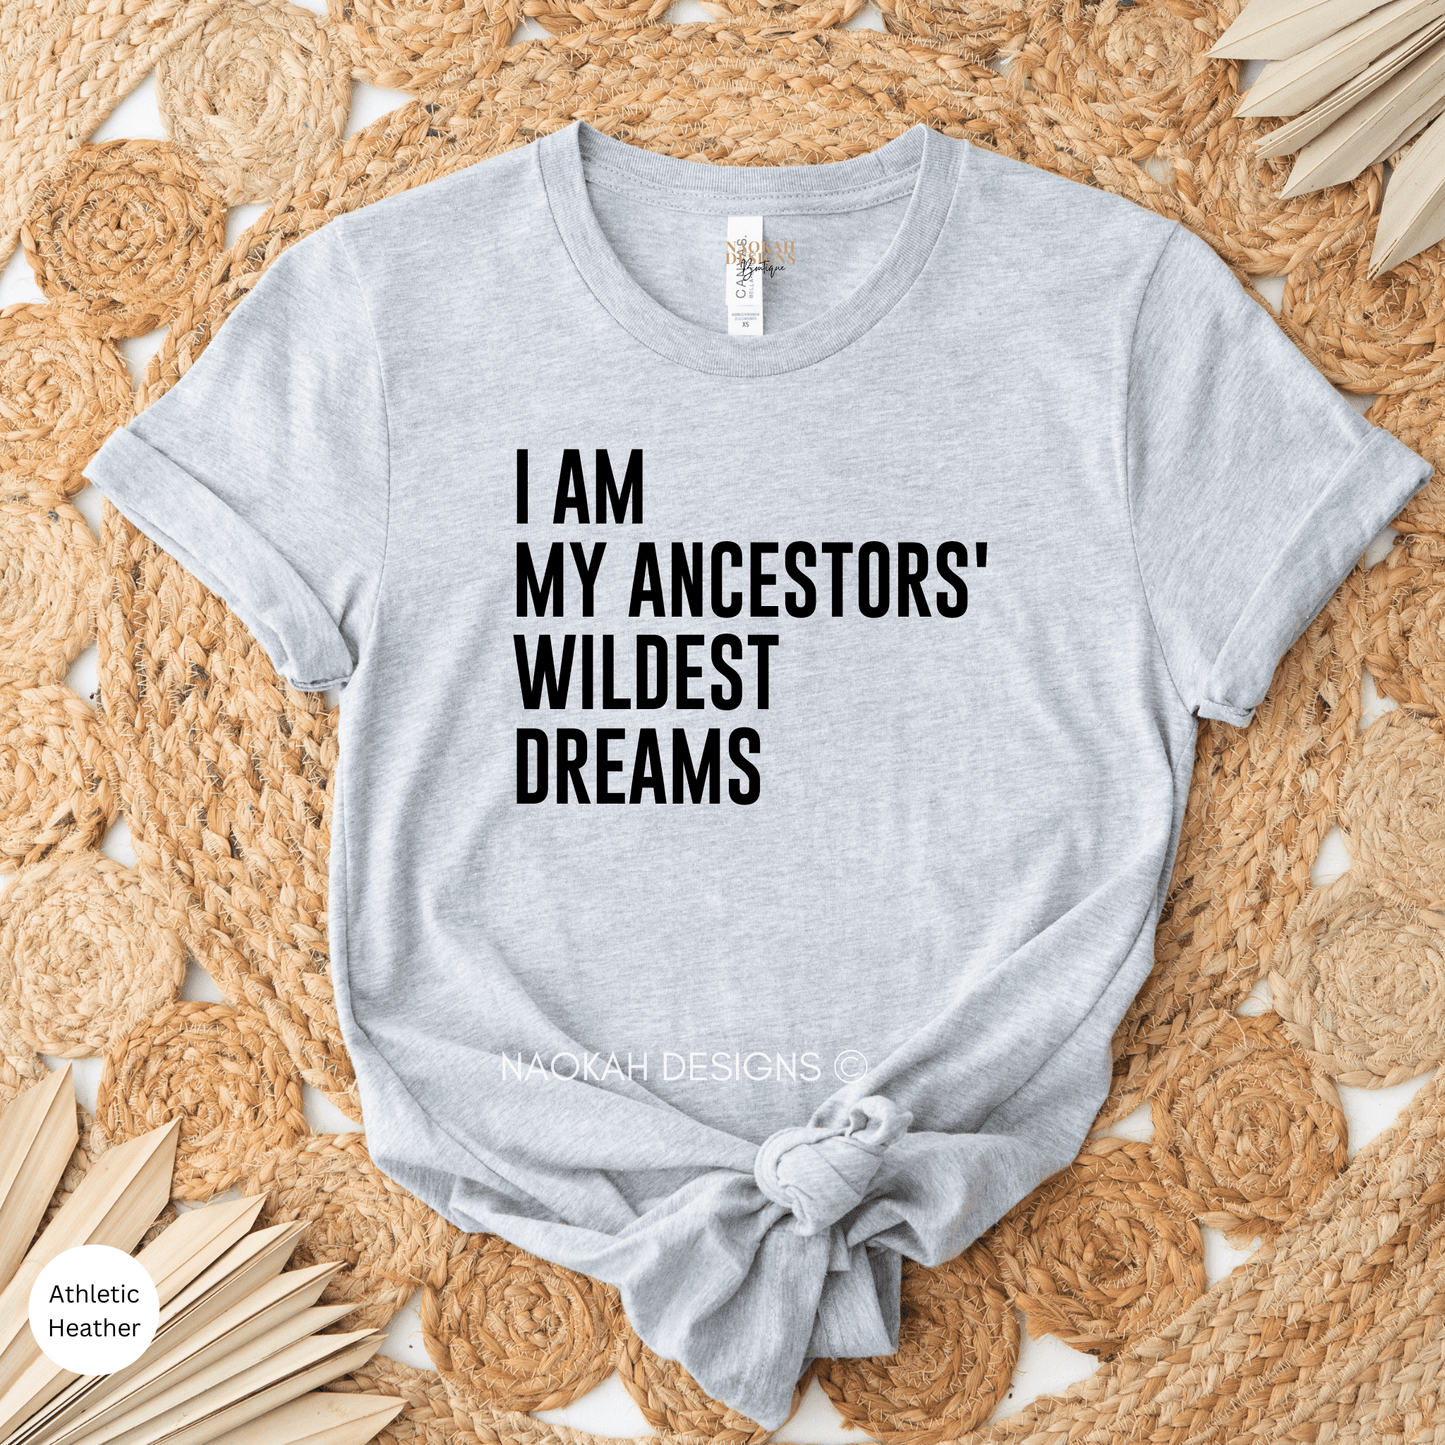 i am my ancestors’ wildest dreams shirt, making my ancestors proud shirt, ancestors guide me, indigenous owned shop, ancestors sent me